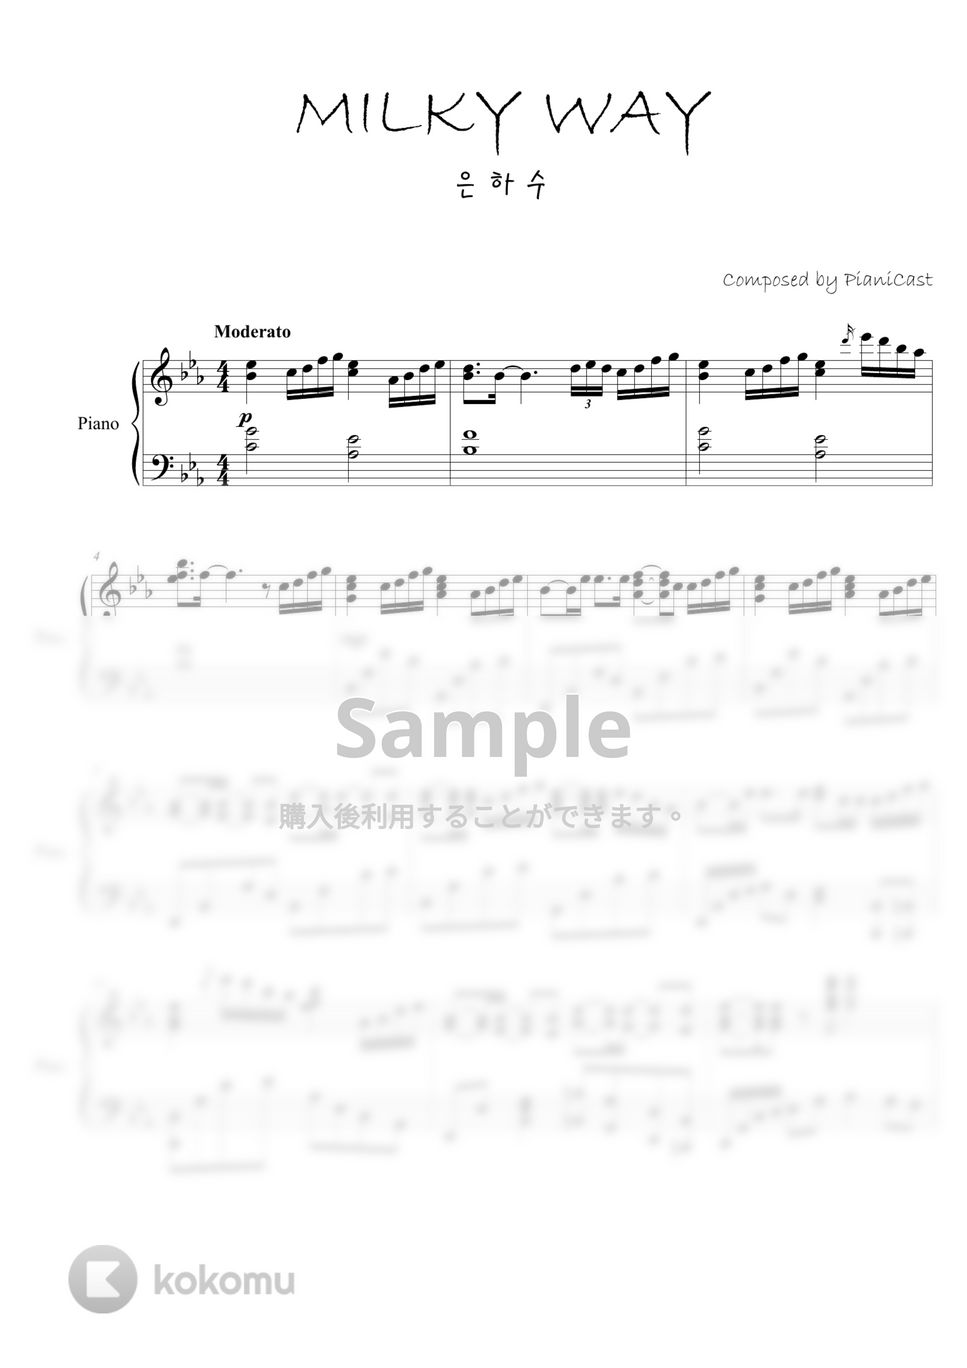 Pianicast - Milky Way by Pianicast